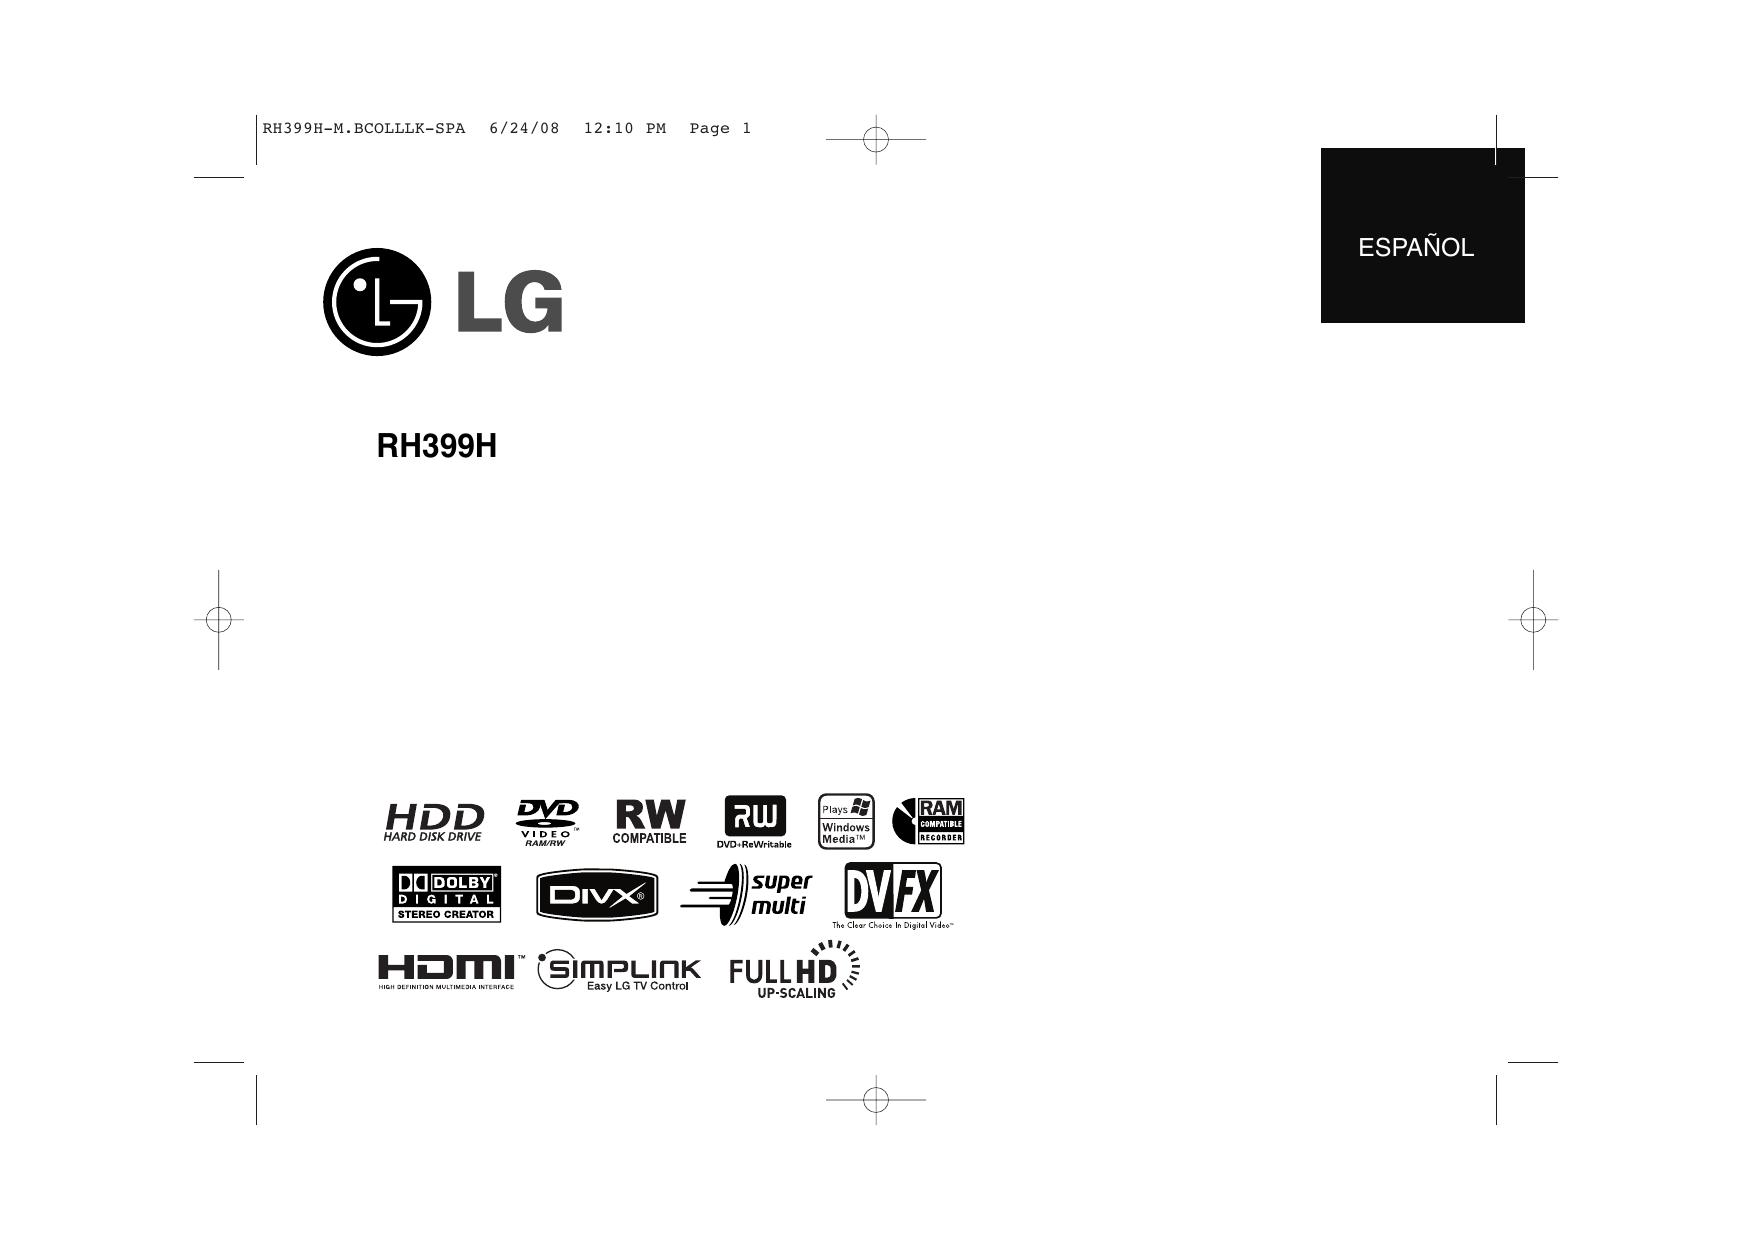 Срок службы lg. LG HDRK 888. LG rh399h. Rh387h,. Инструкция DVD LG.